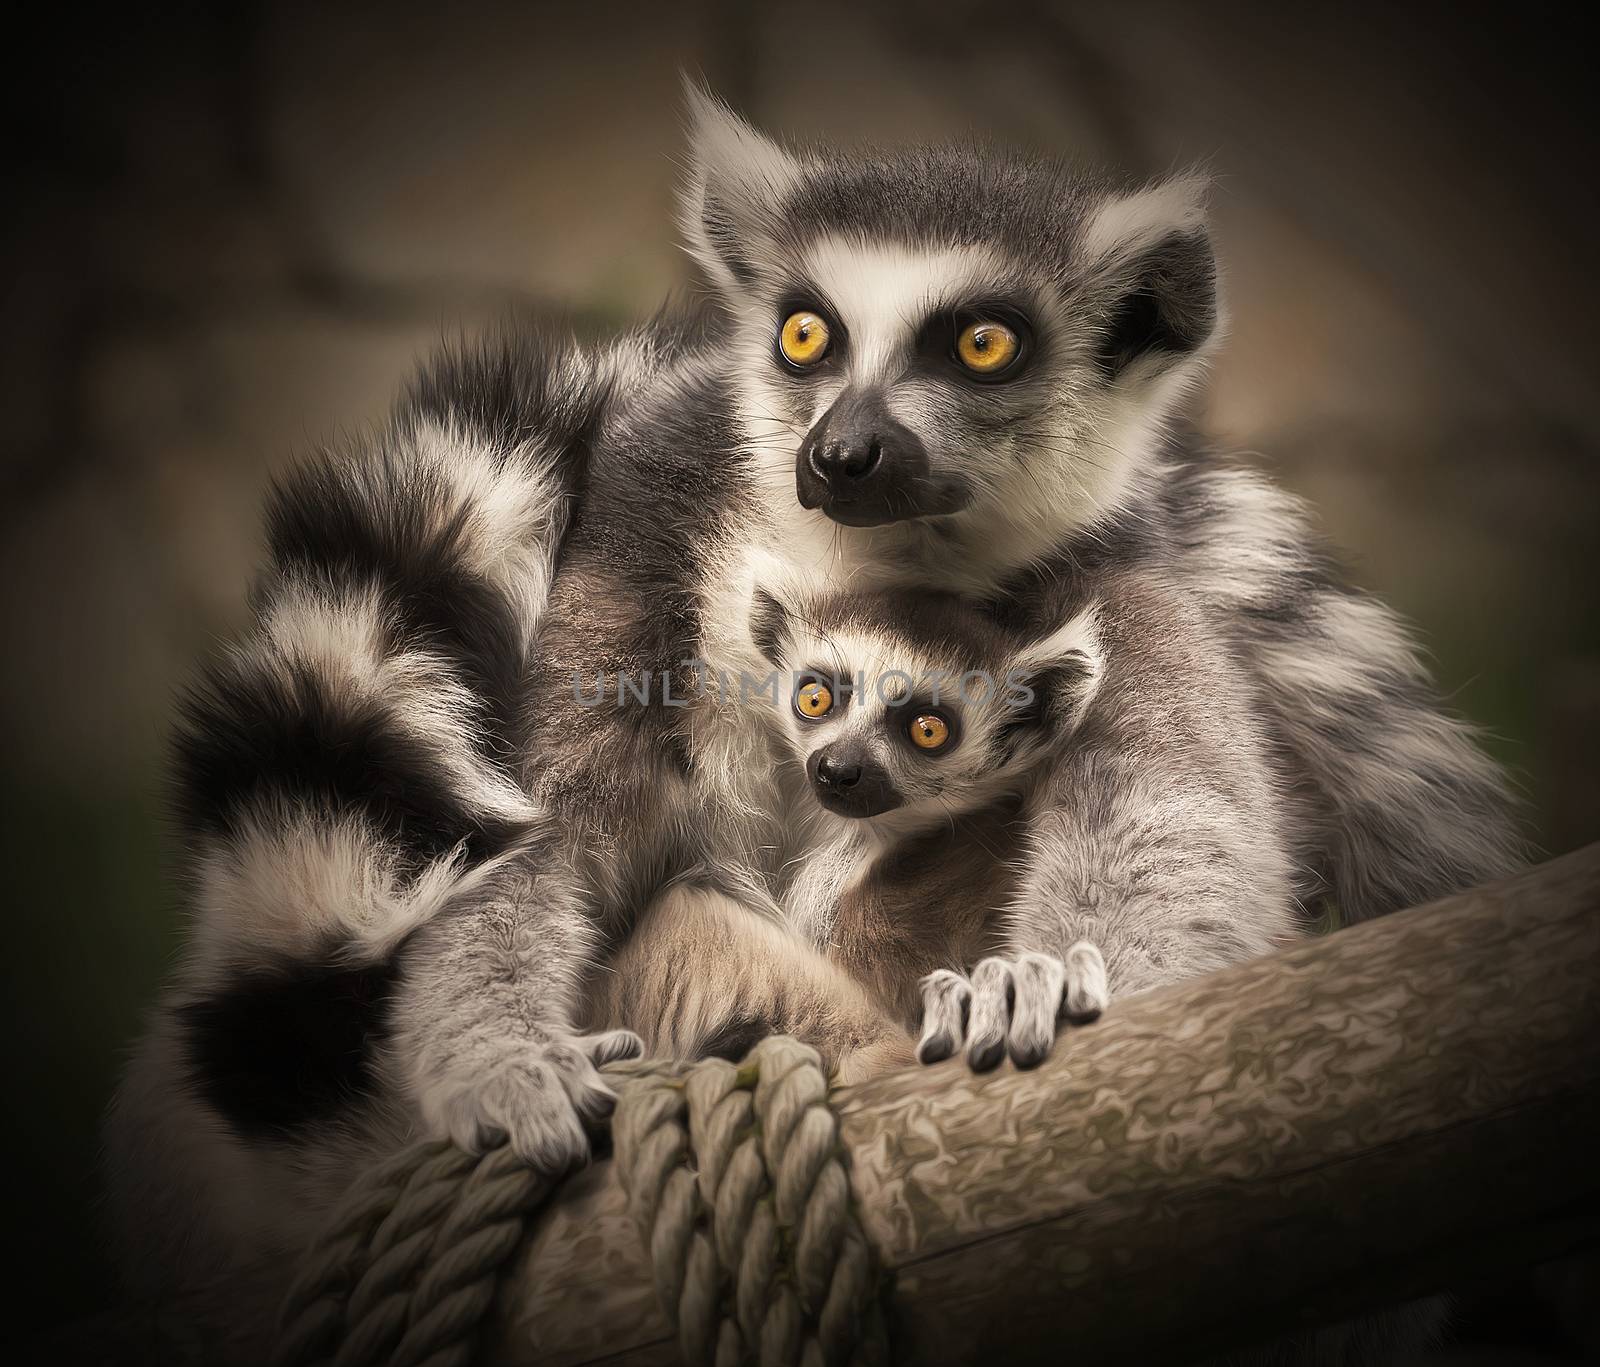 Two lemurs sit cuddling together